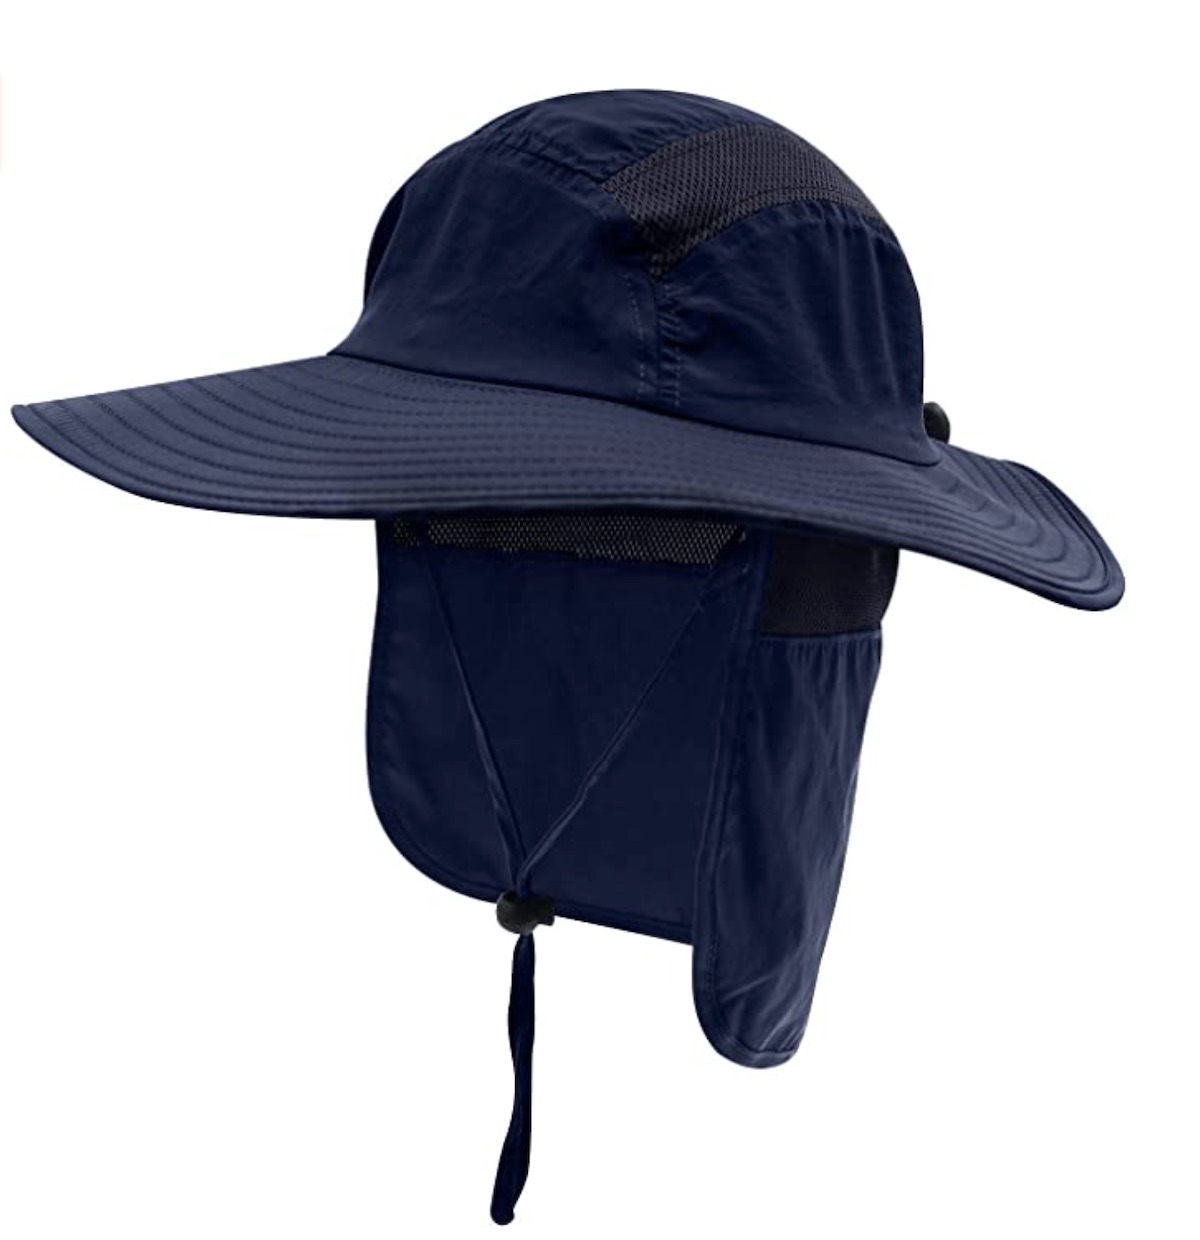 Suma-ma Unisex Hiking Fishing Camp Hats Summer Outdoor Sunscreen Protection Neck Face Head Cap Big Brim Cap